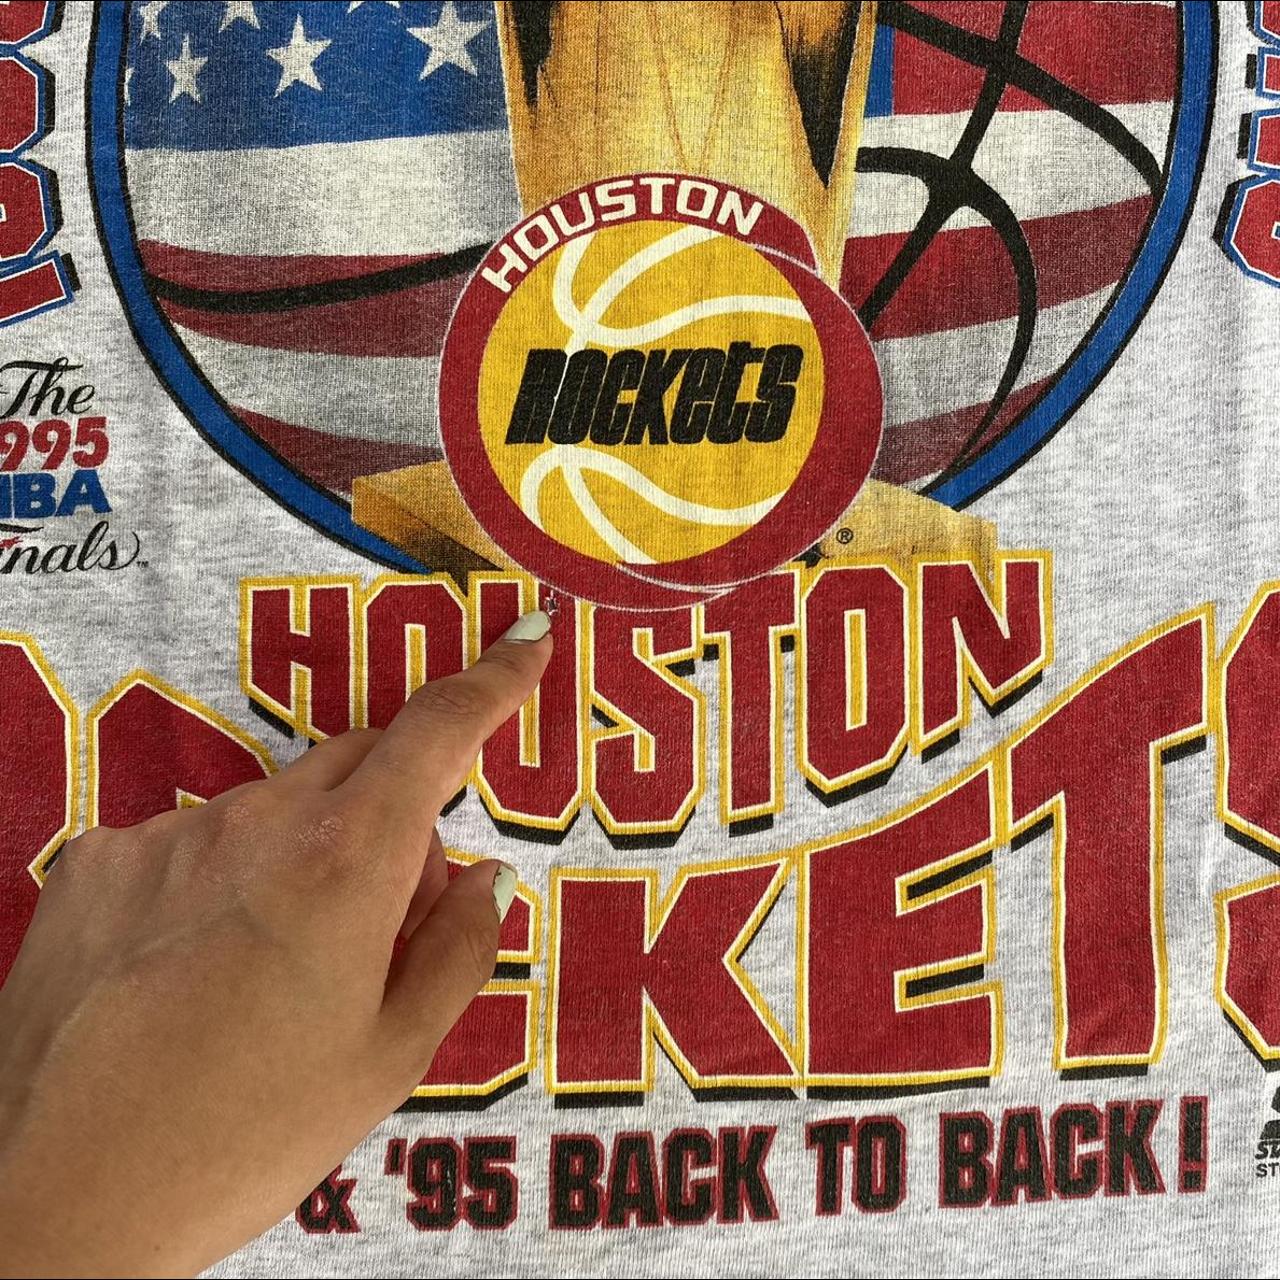 Vintage Starter - Houston Rockets NBA World Champions T-Shirt 1995